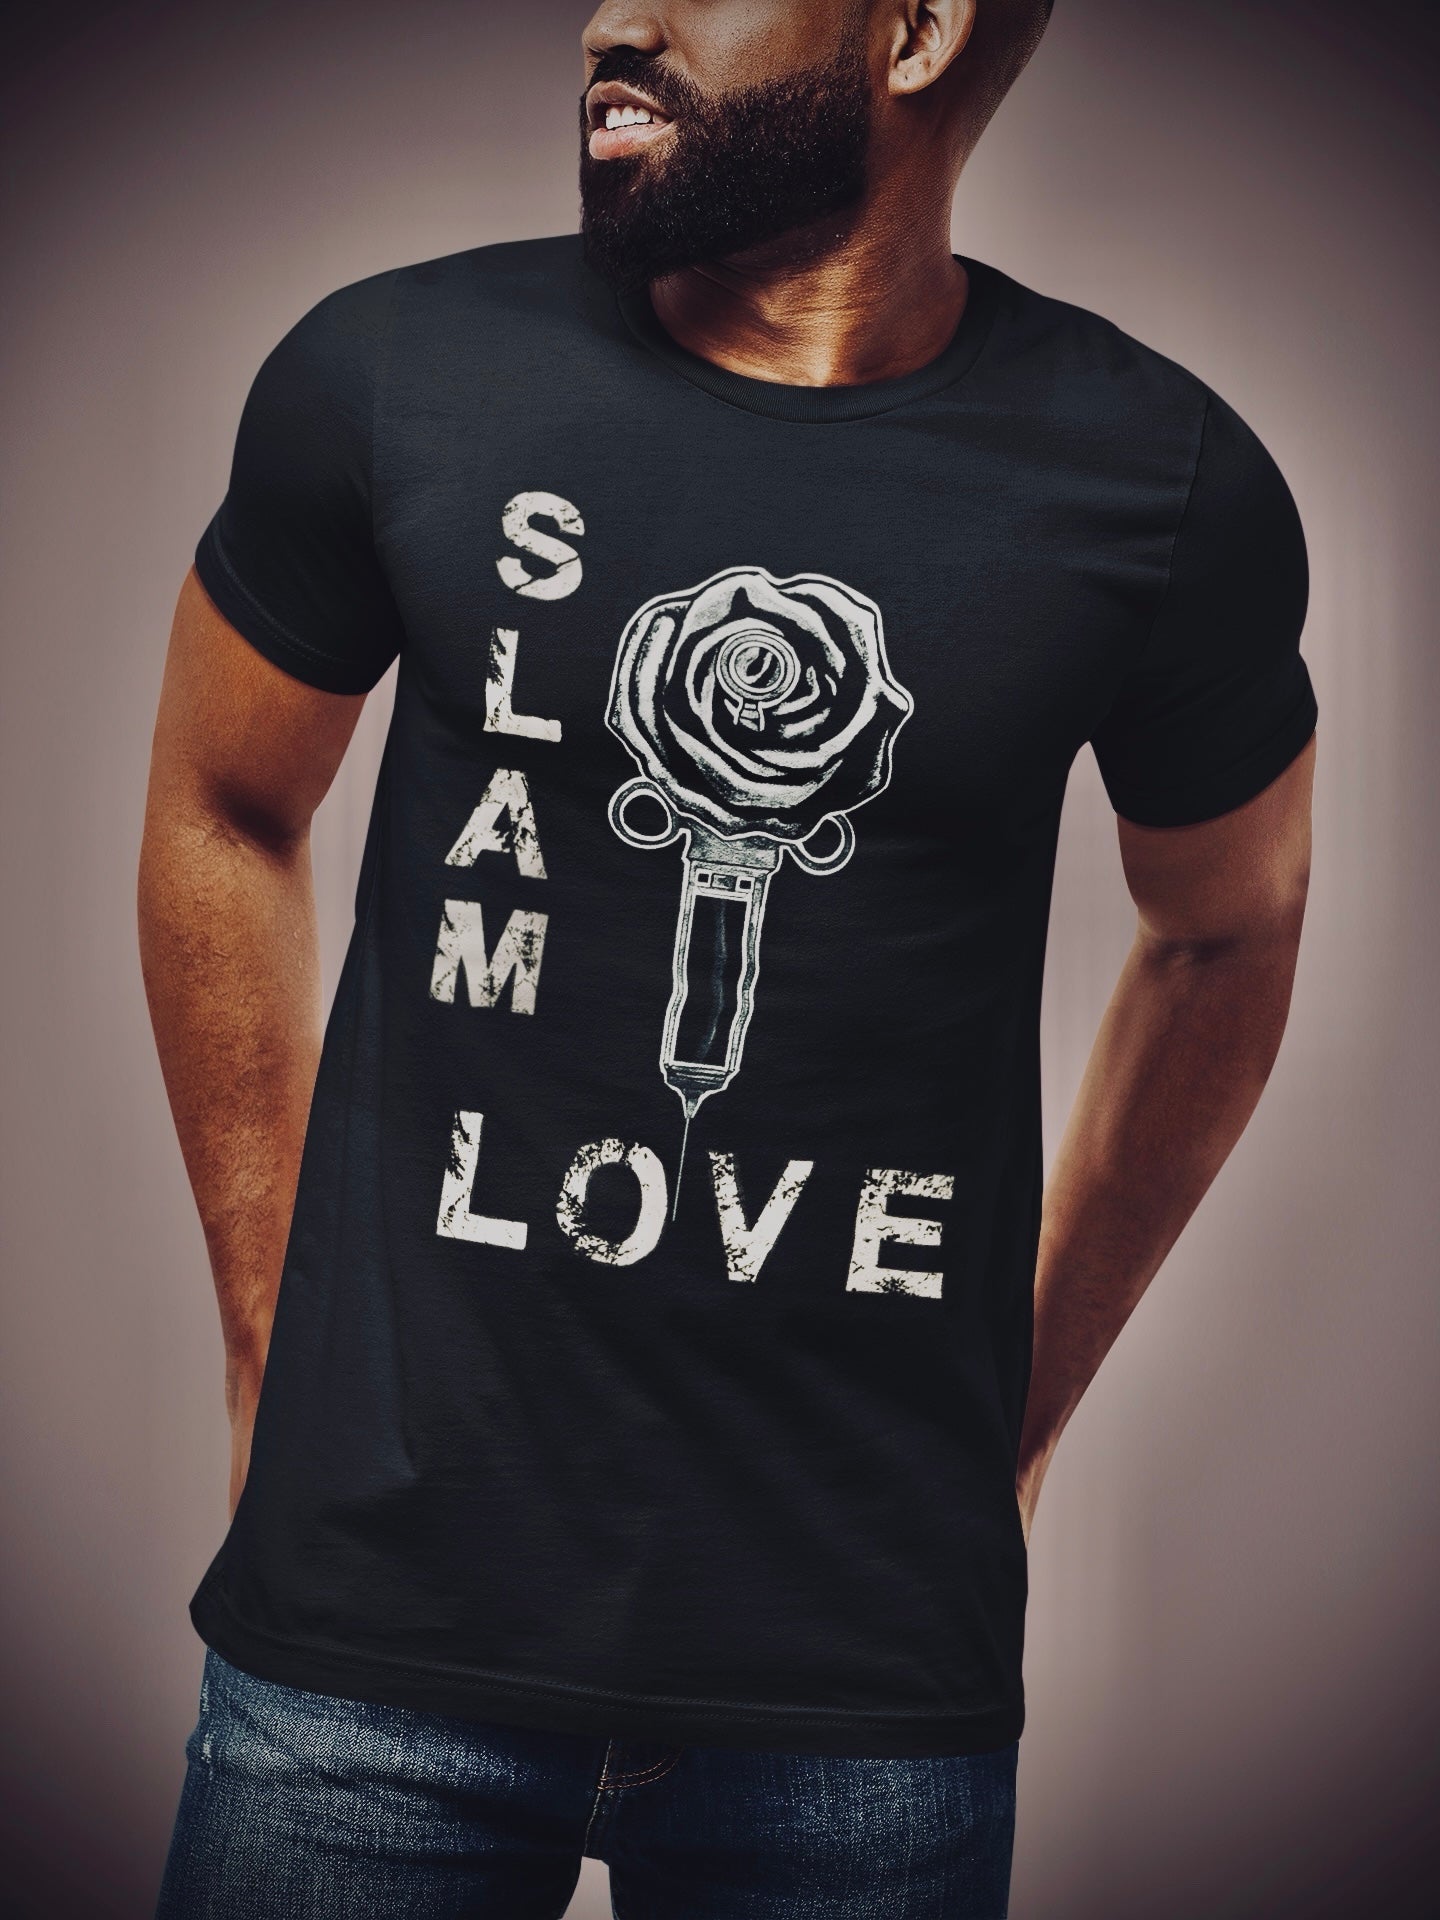 Slam Love (Noir) Unisex Short Sleeve - Black Heather Tee